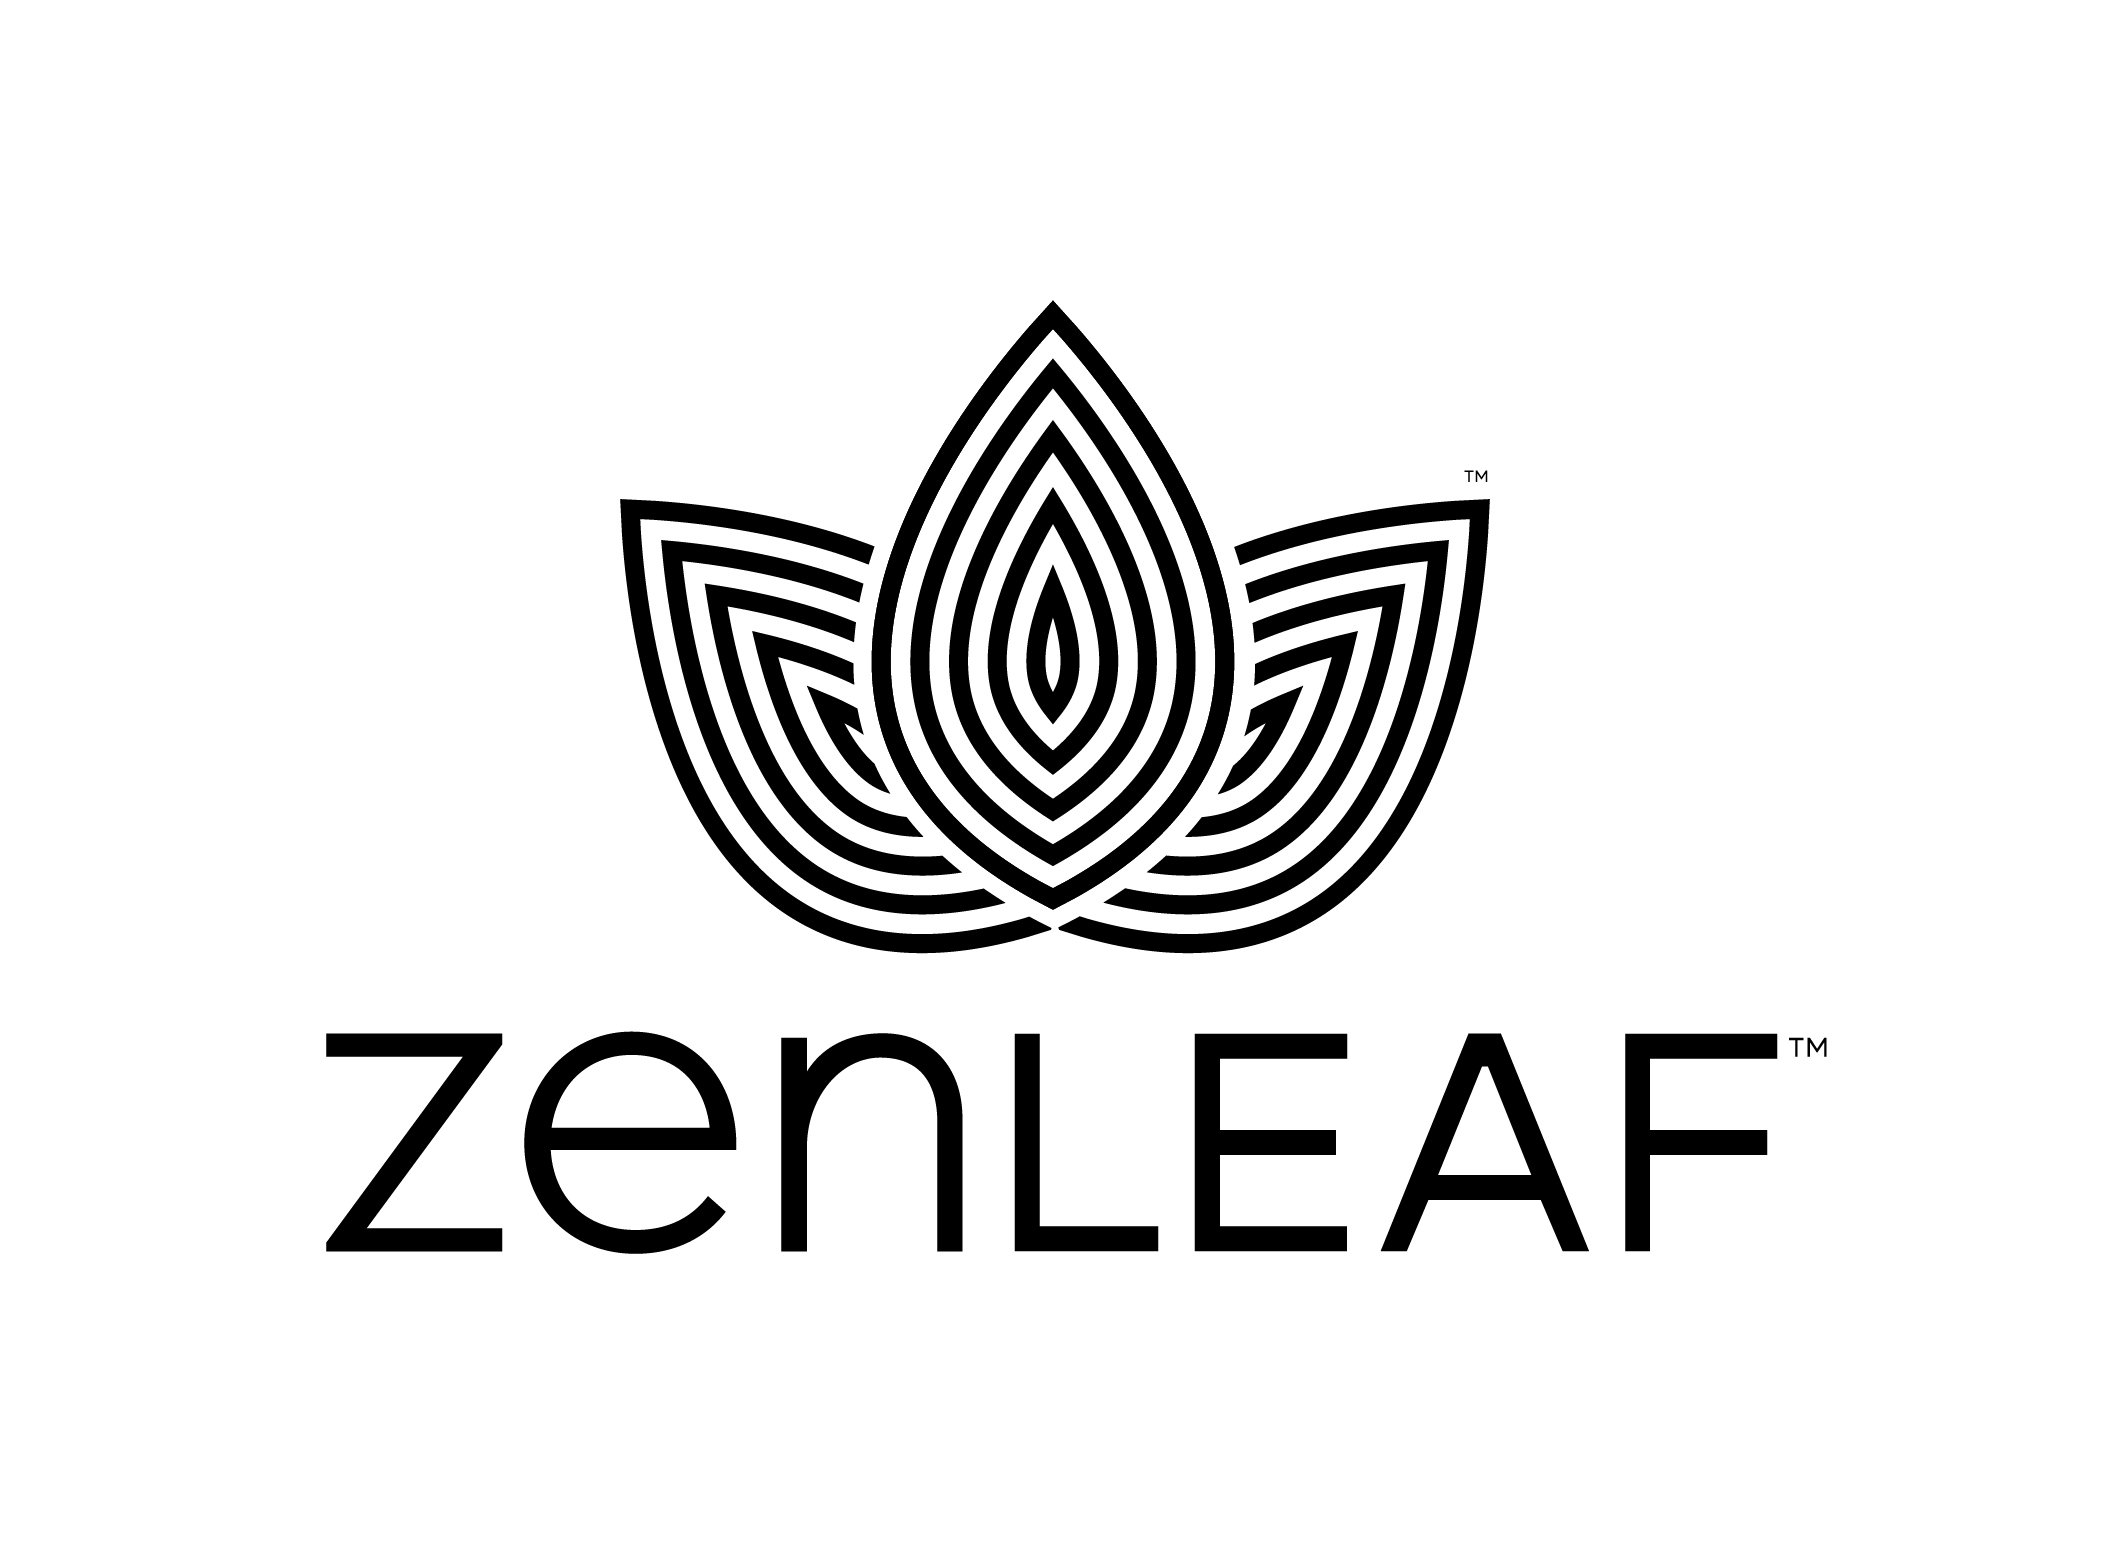 Zen Leaf Pasadena